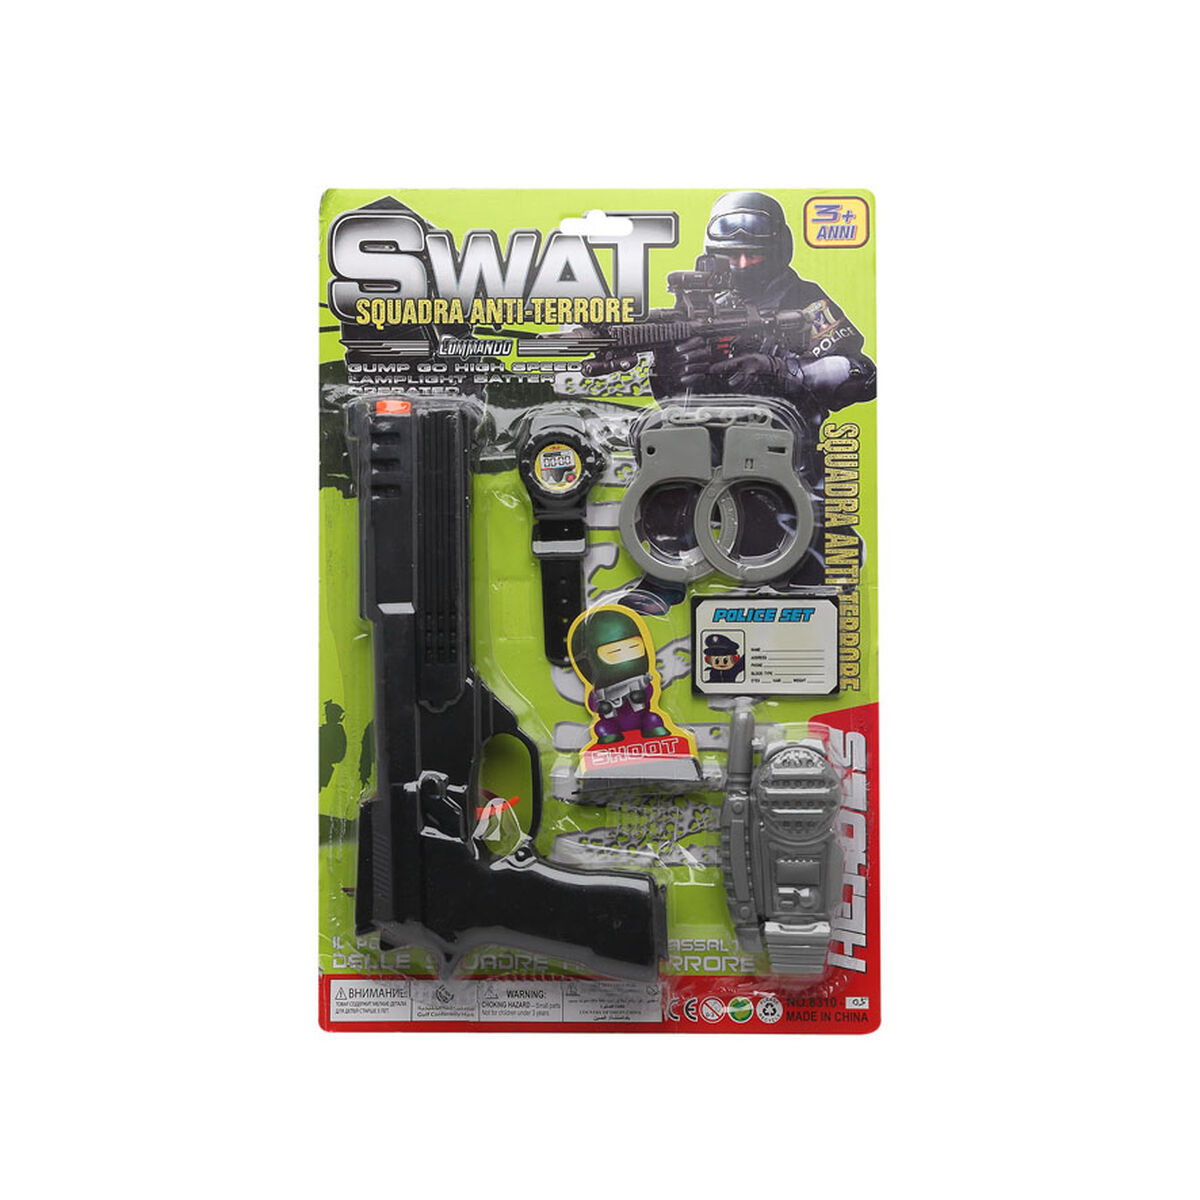 Revolver Swat Camouflage